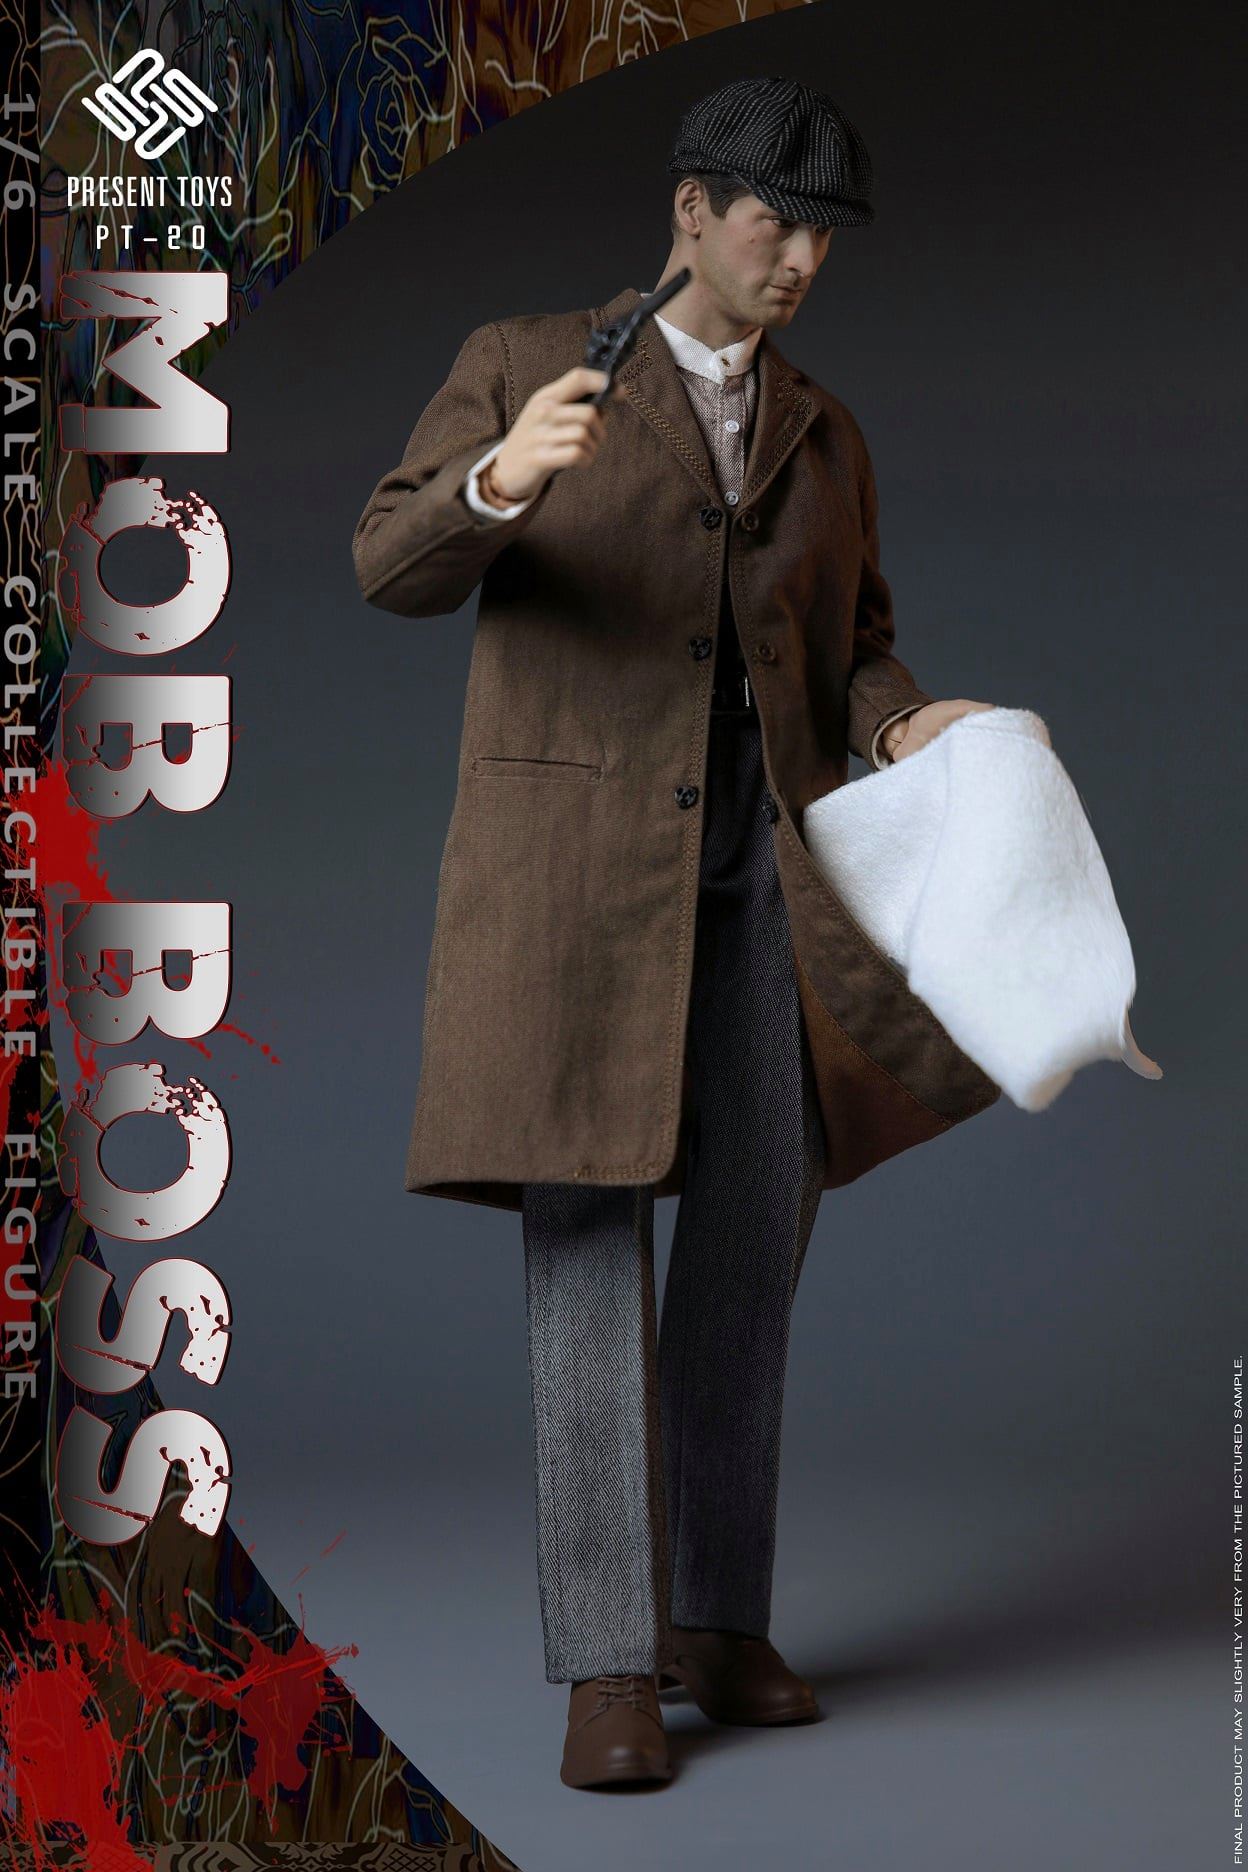 Pedido Figura Mob Boss marca Present Toys PT-20 escala 1/6 (BACK ORDER)